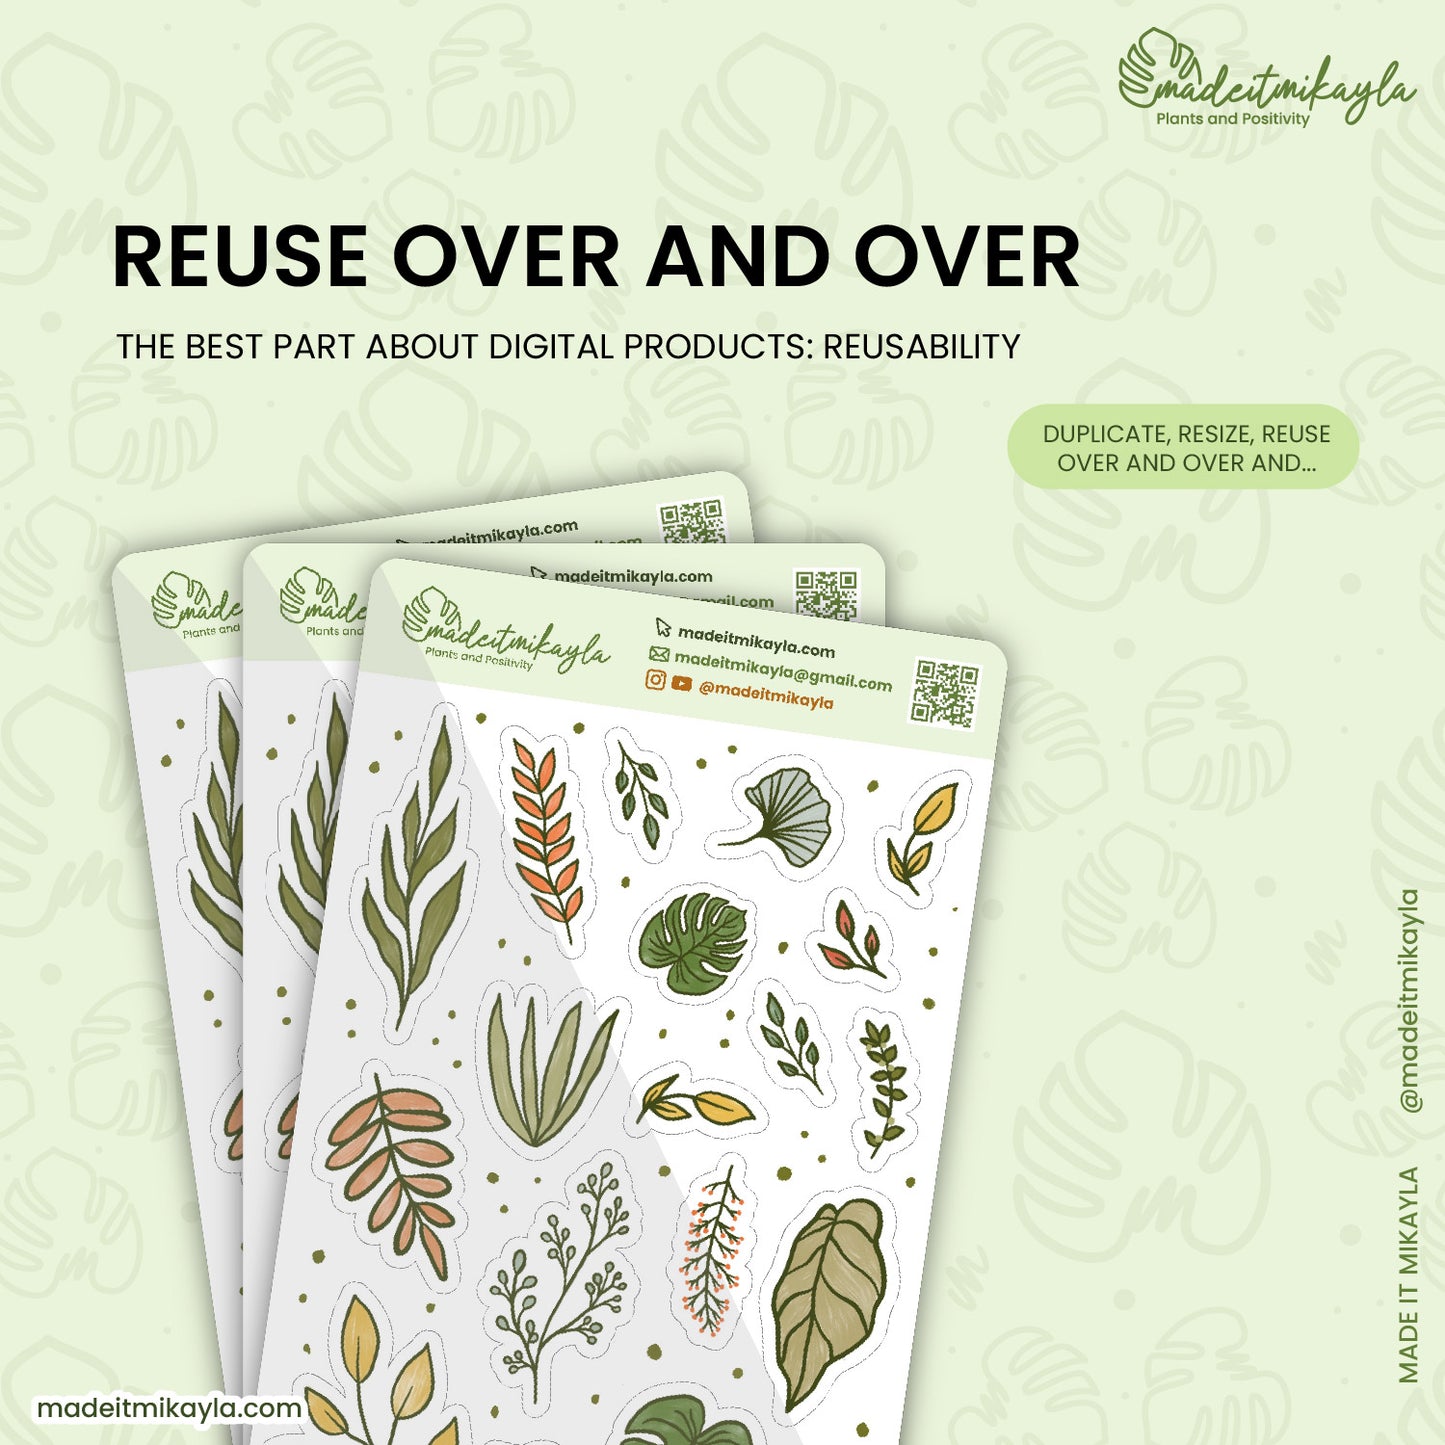 Botanical Foliage Digital Stickers | MadeItMikayla